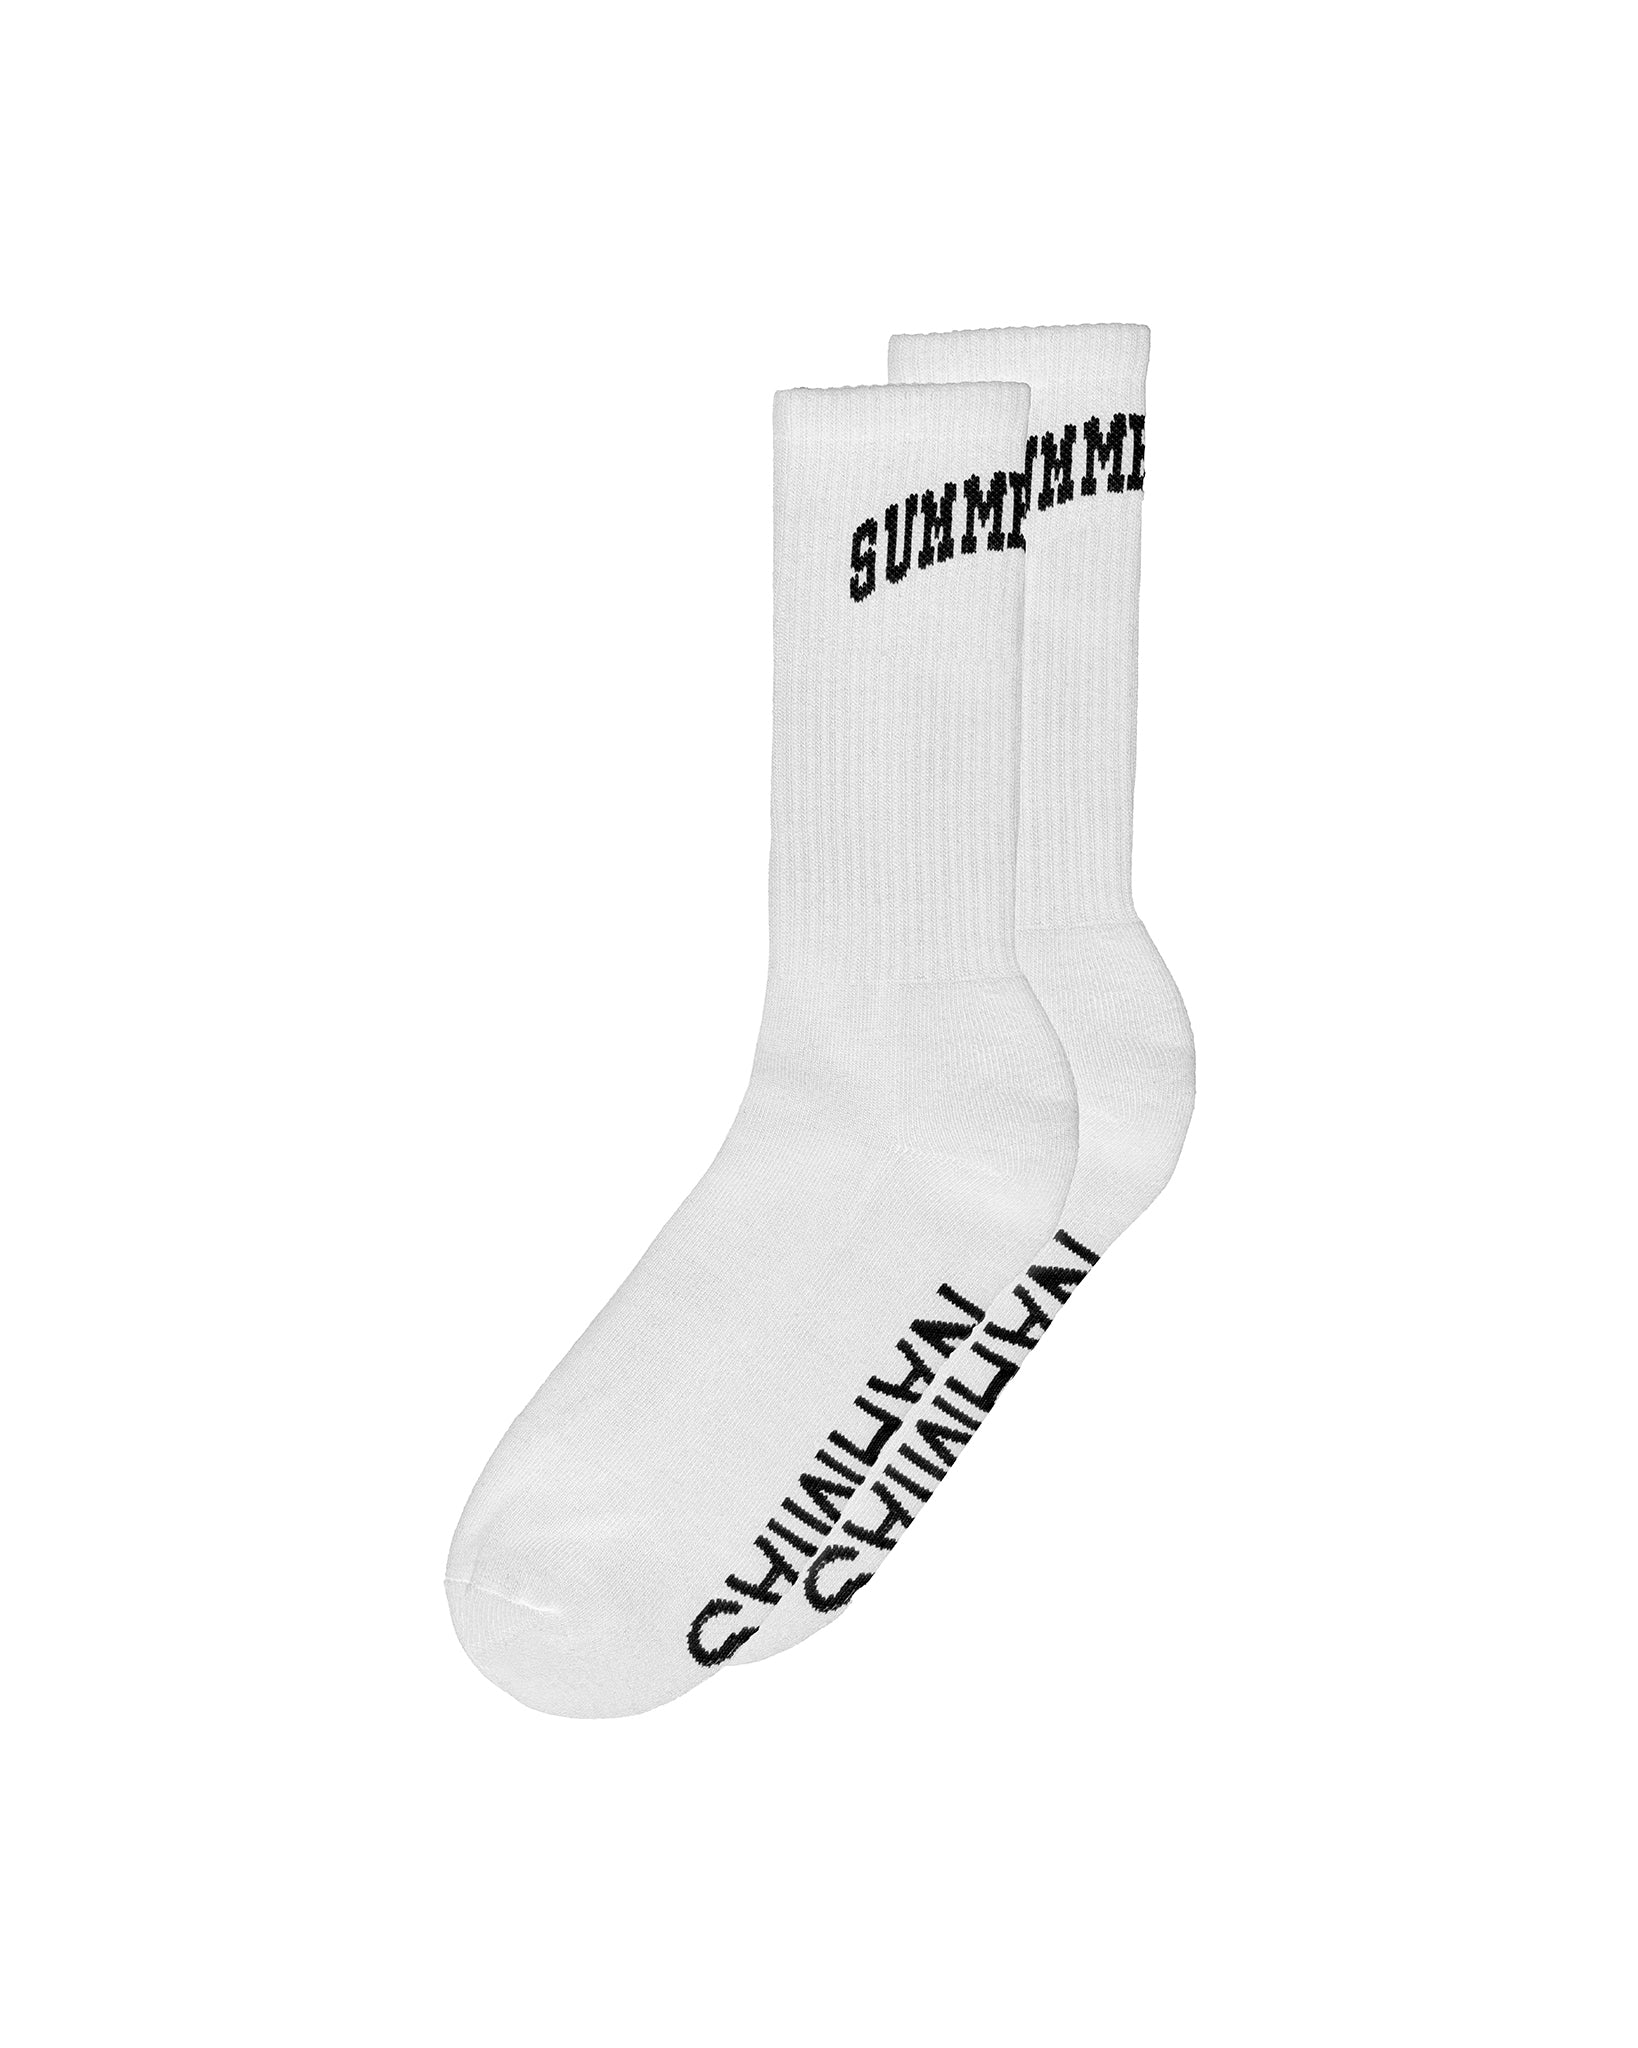 Summerland Socks